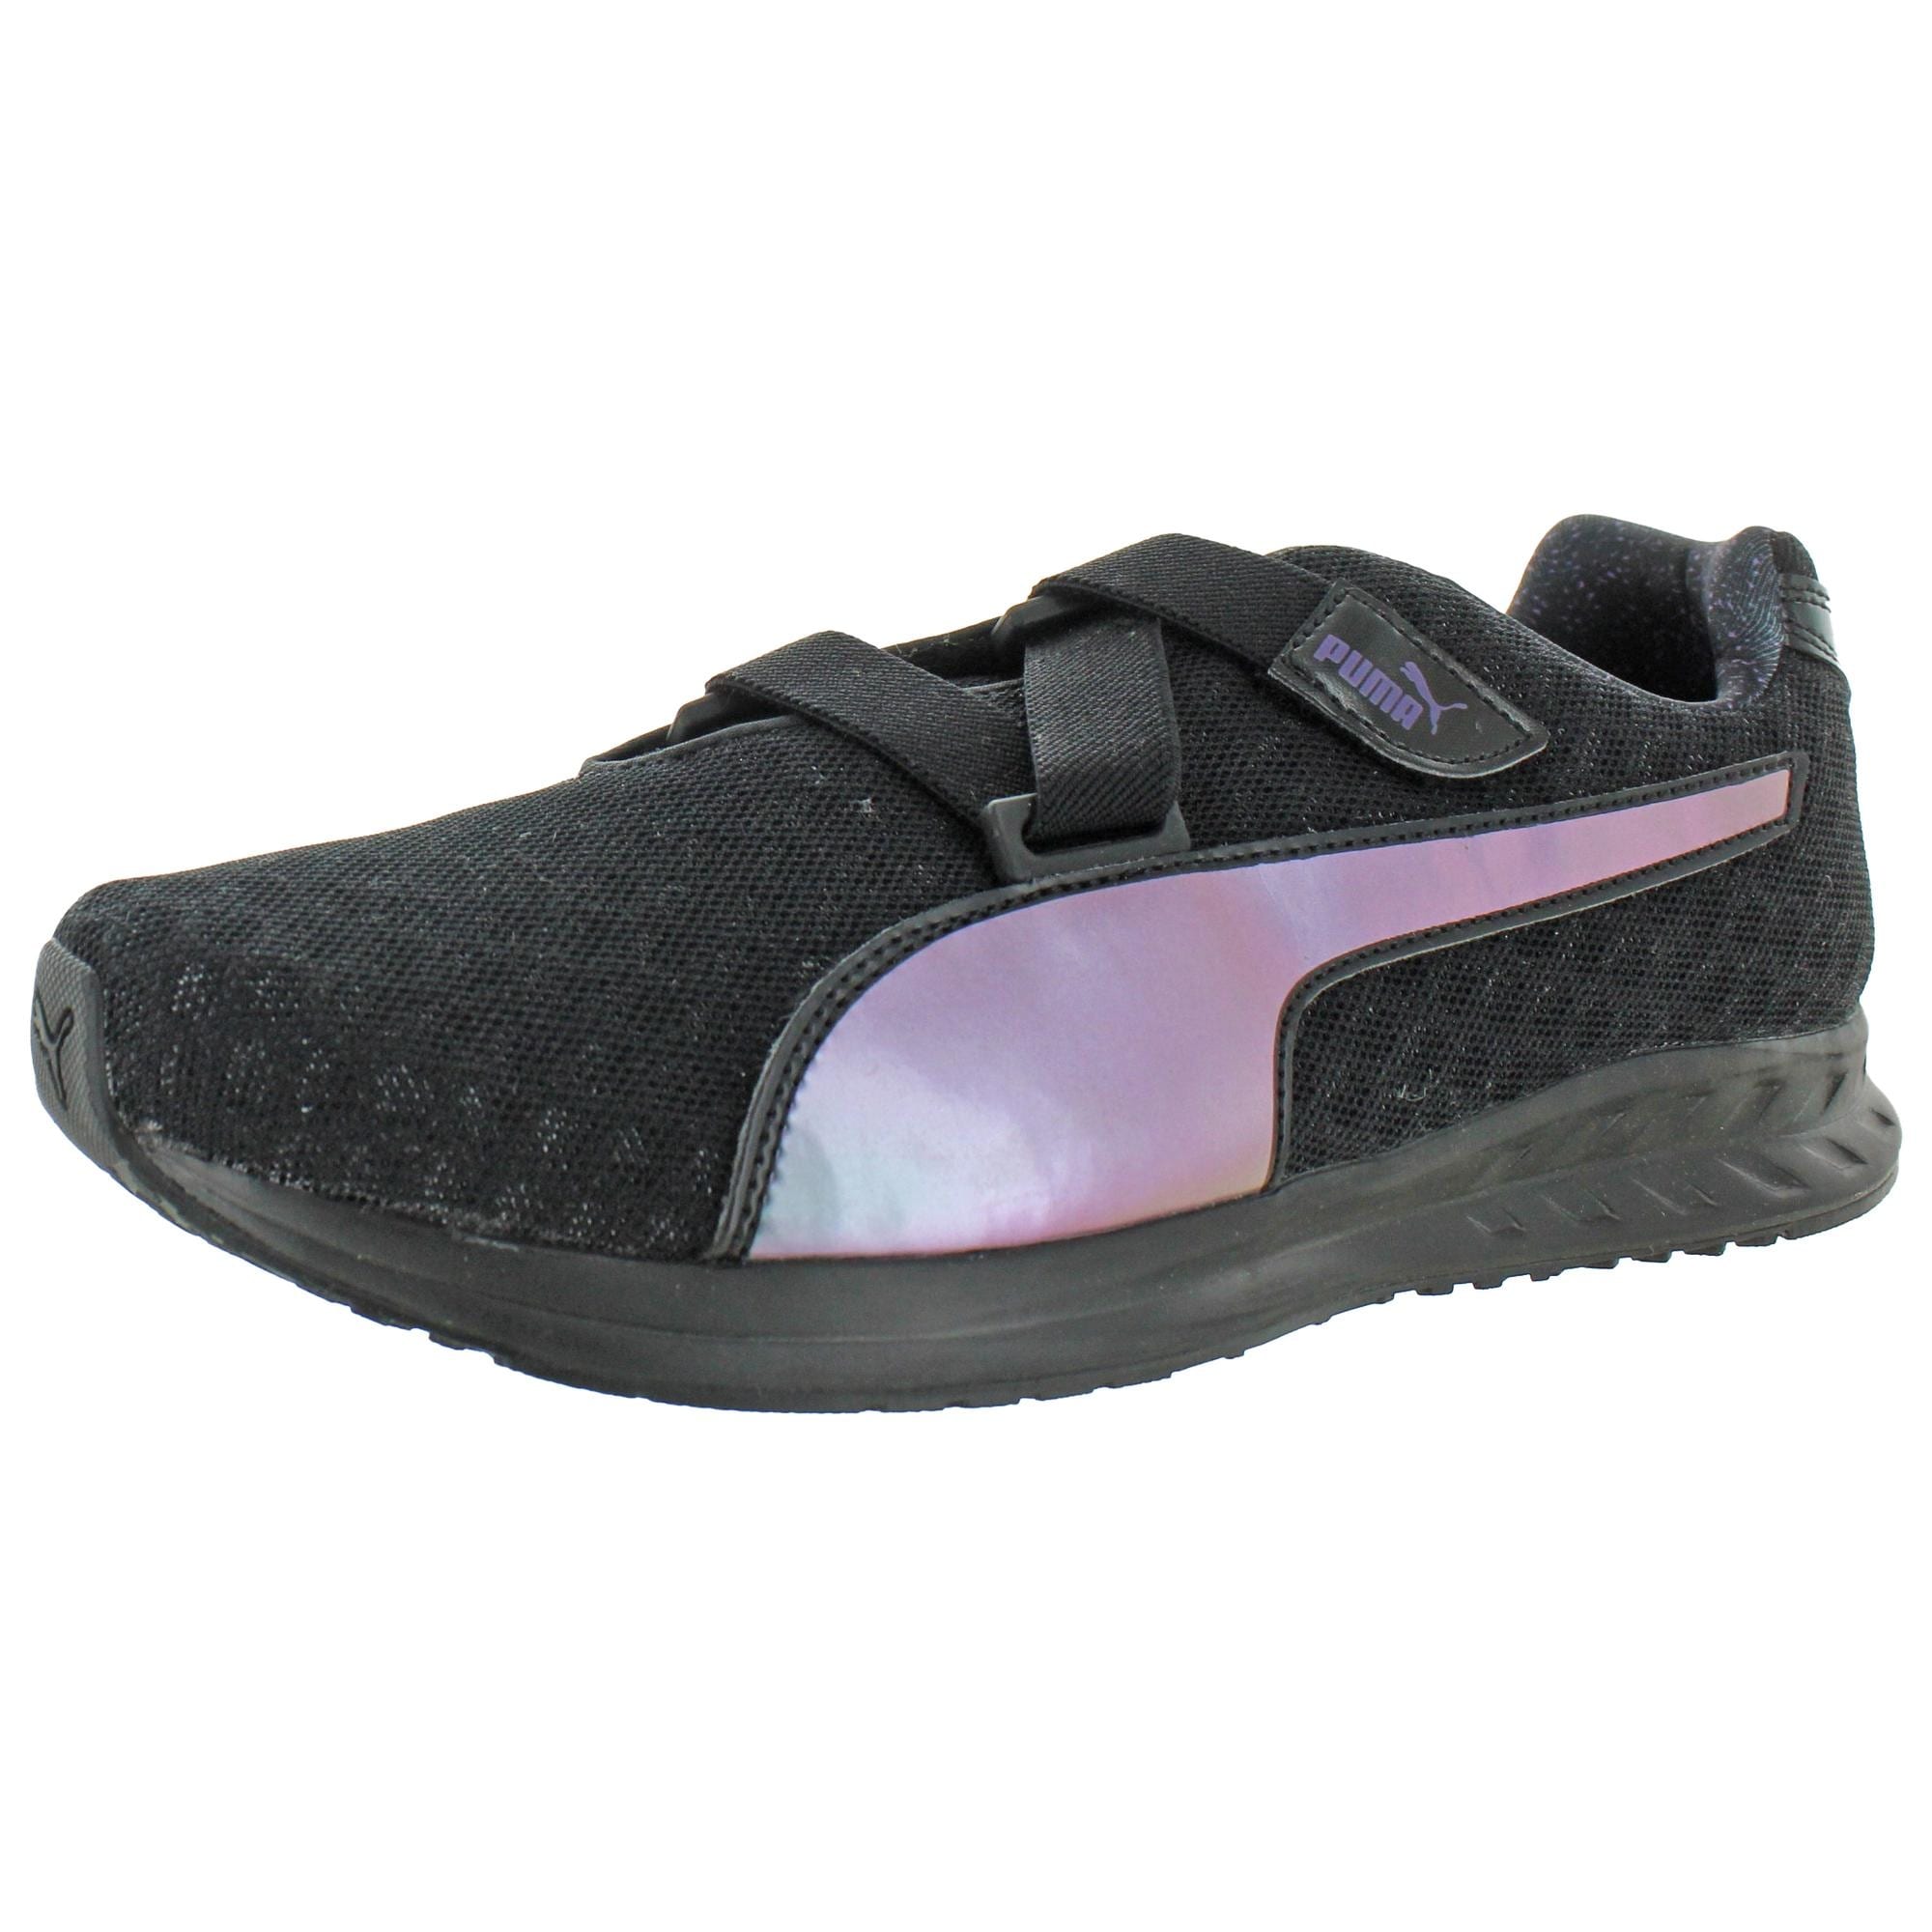 puma soft foam shoes women's